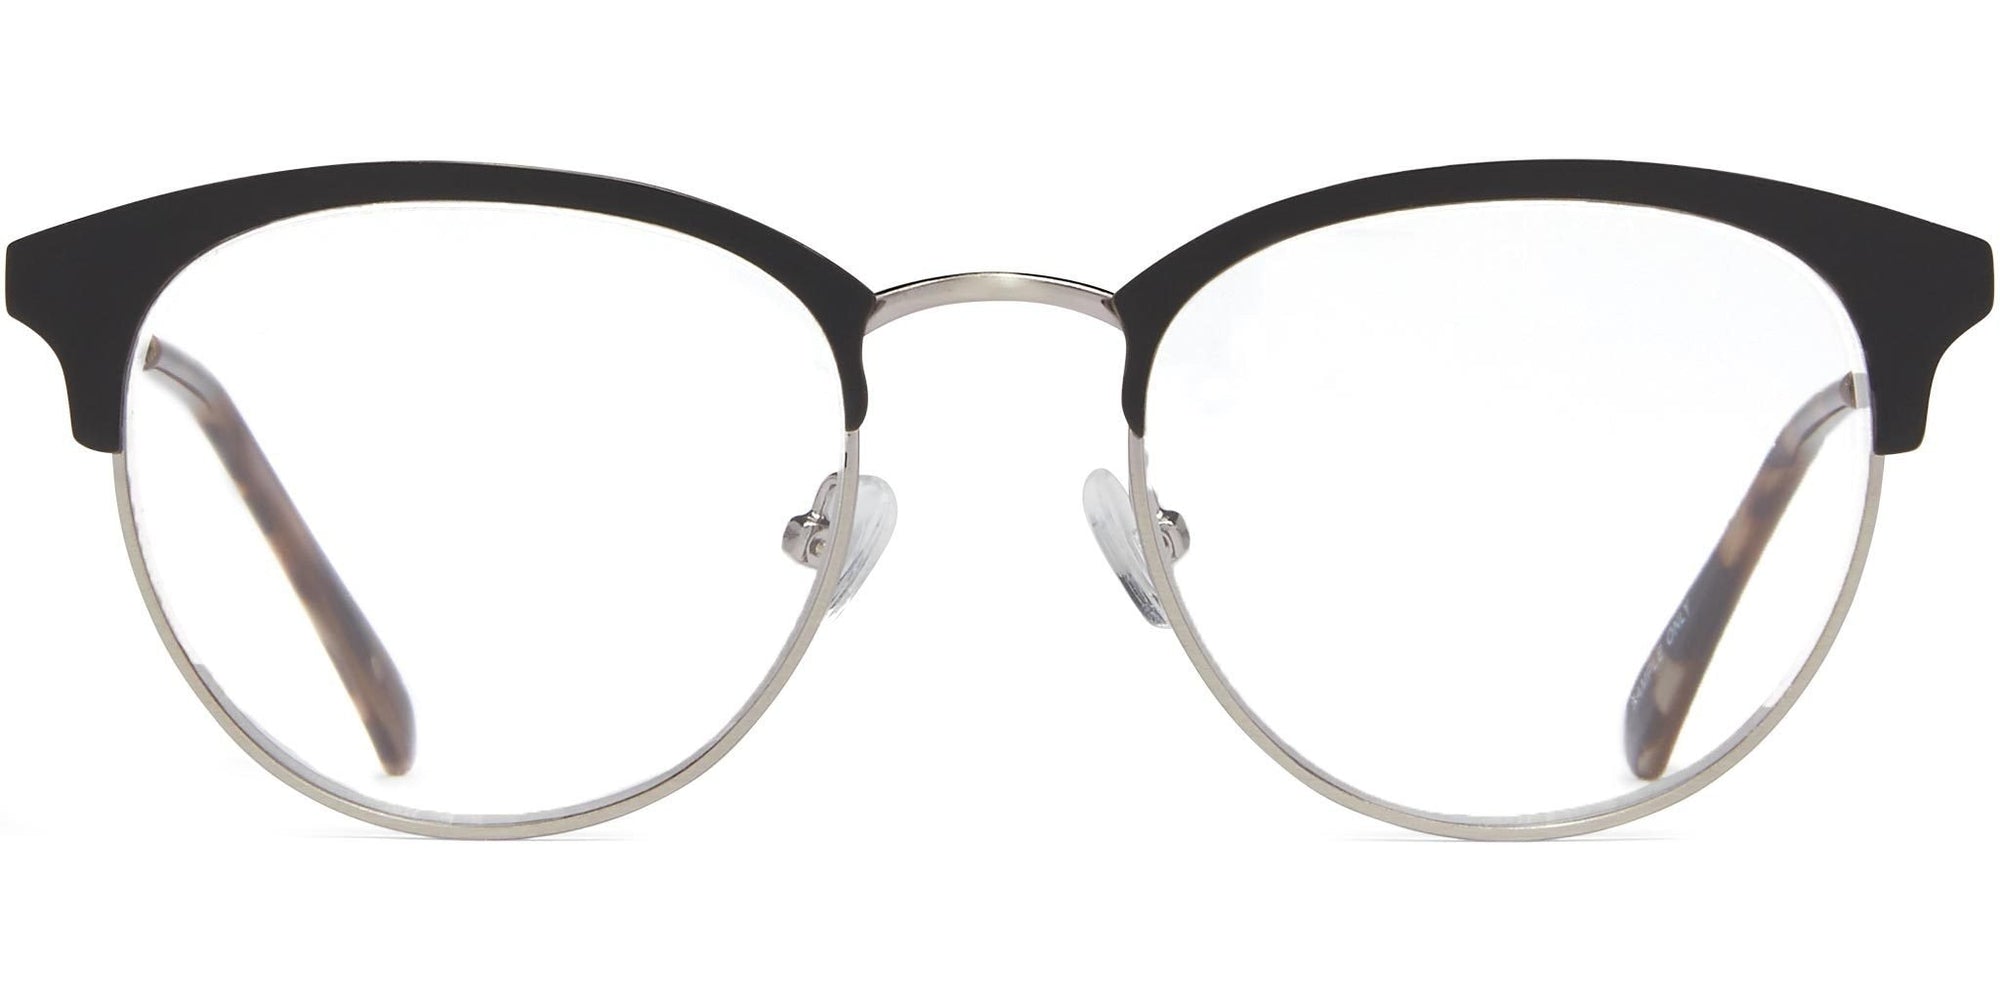 Brooklyn - Black/Gunmetal / 1.25 - Reading Glasses